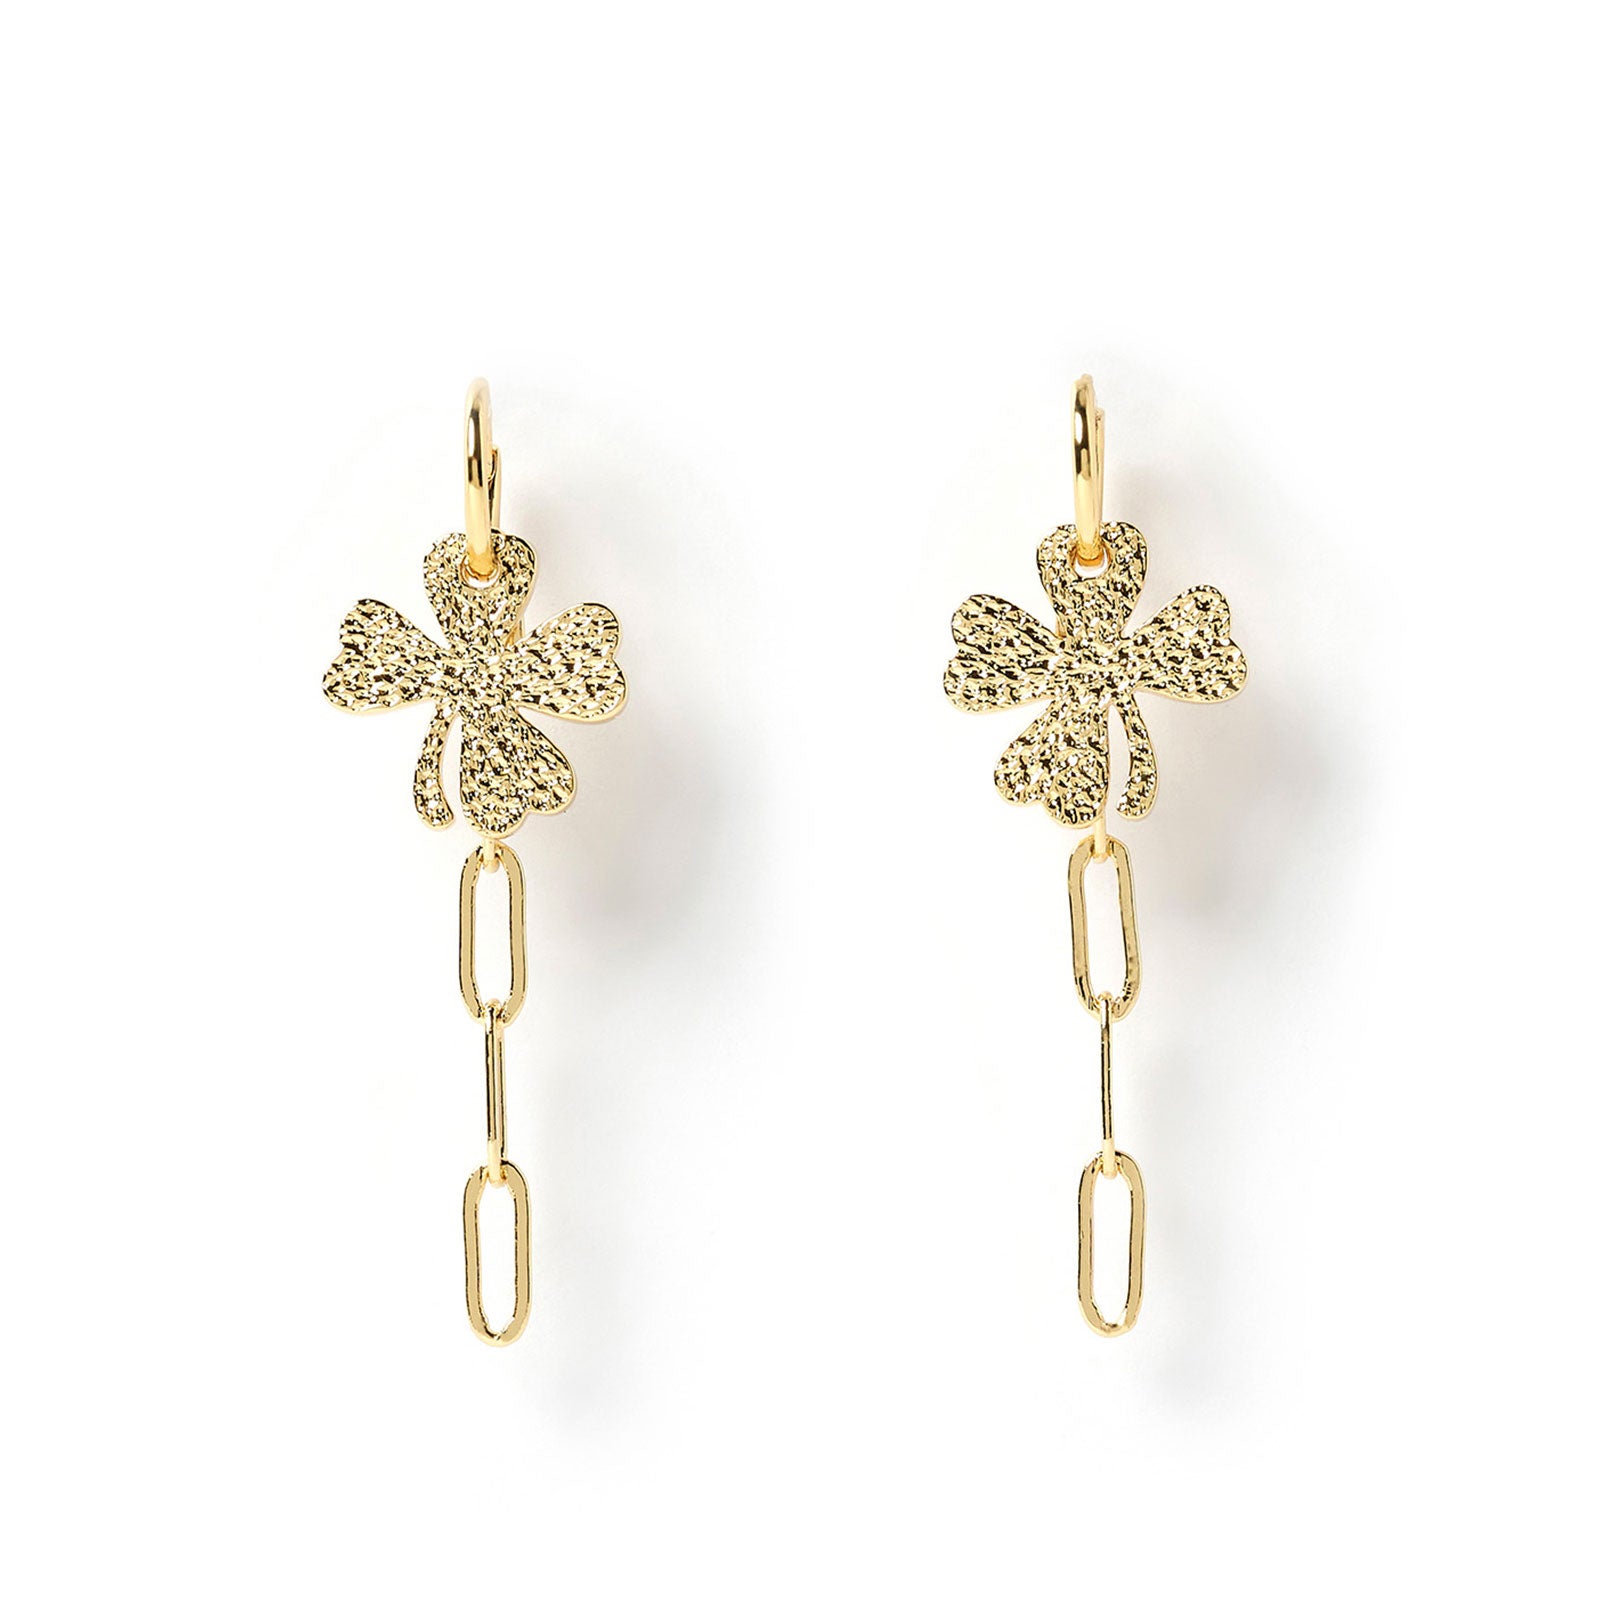 Bransby Gold Clover Earrings